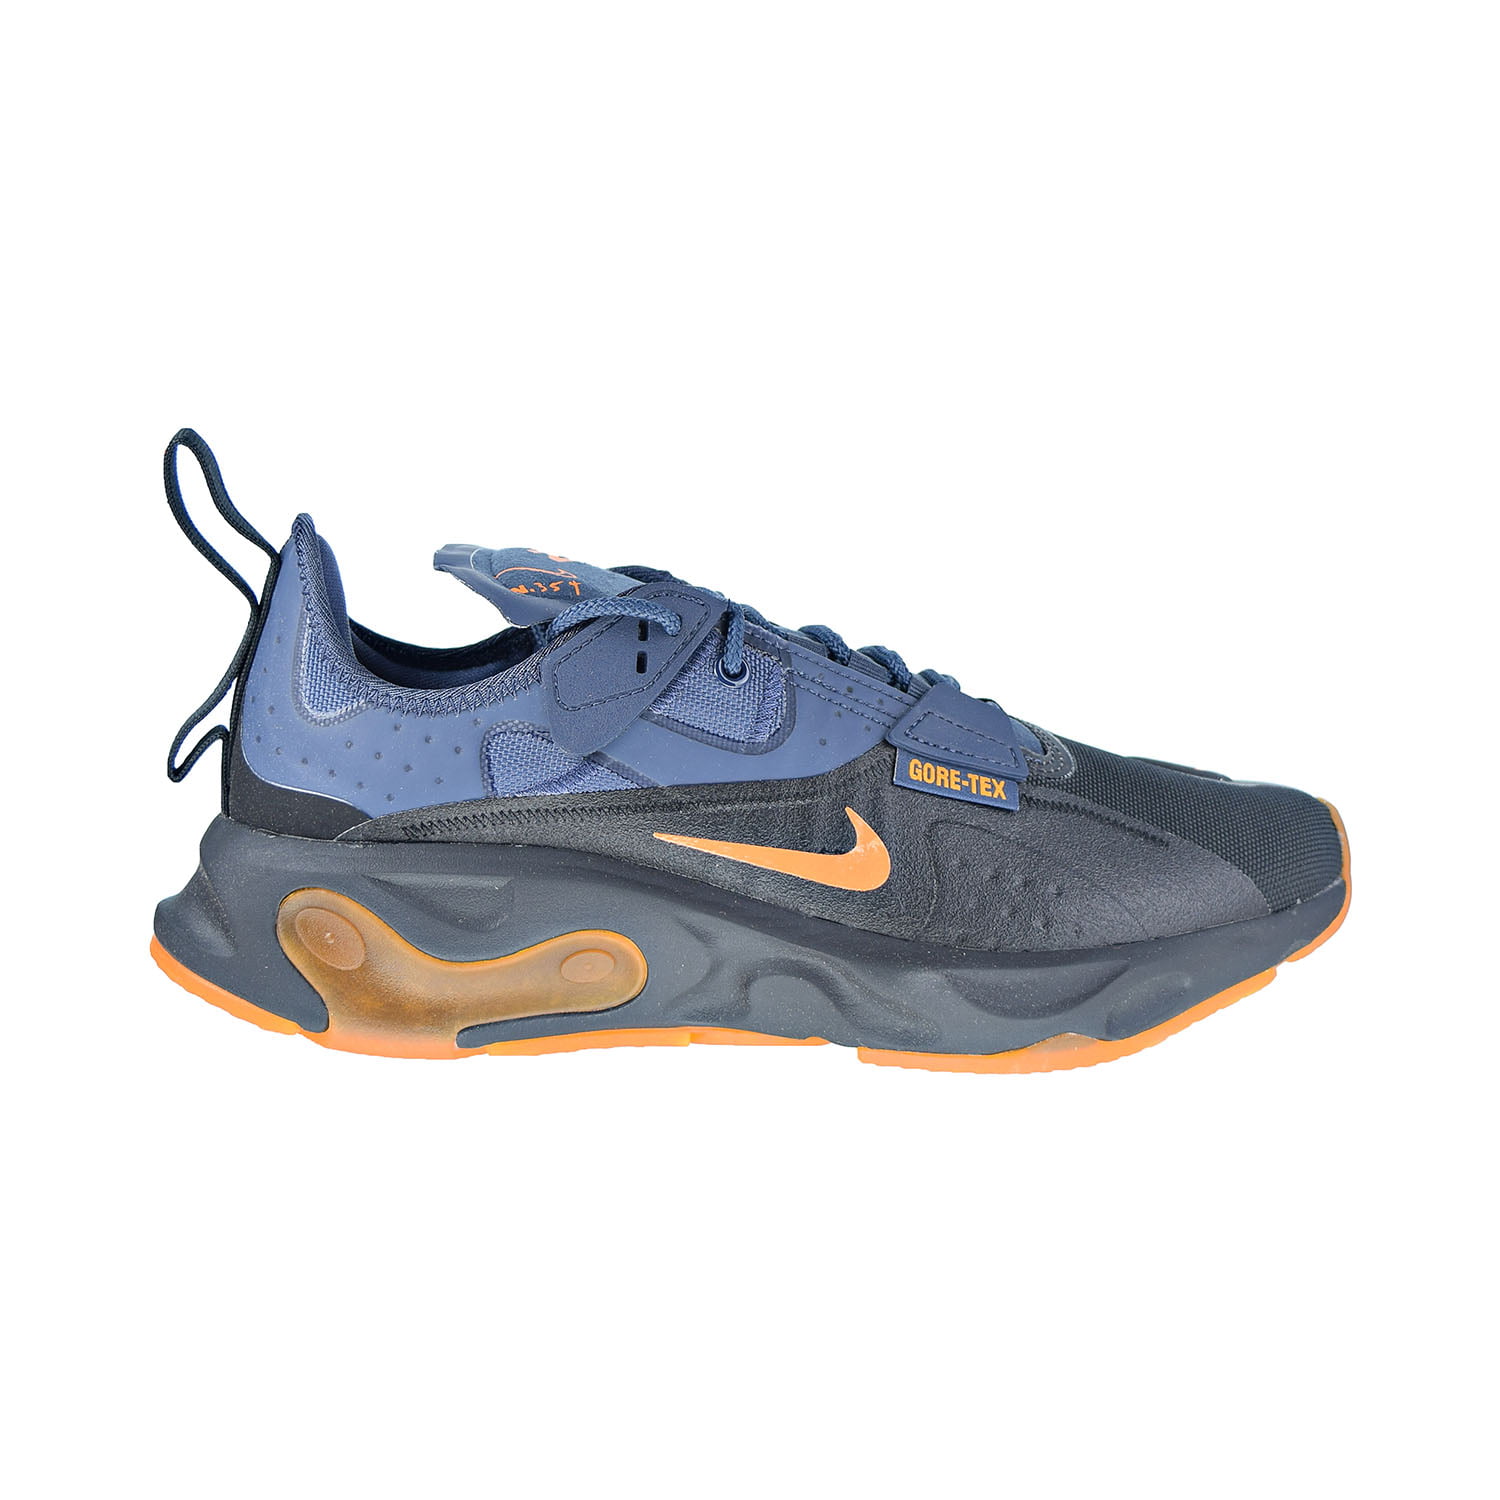 Nike React-Type GTX Men's Shoes Black-Thunder Grey-Light Carbon bq4737-001